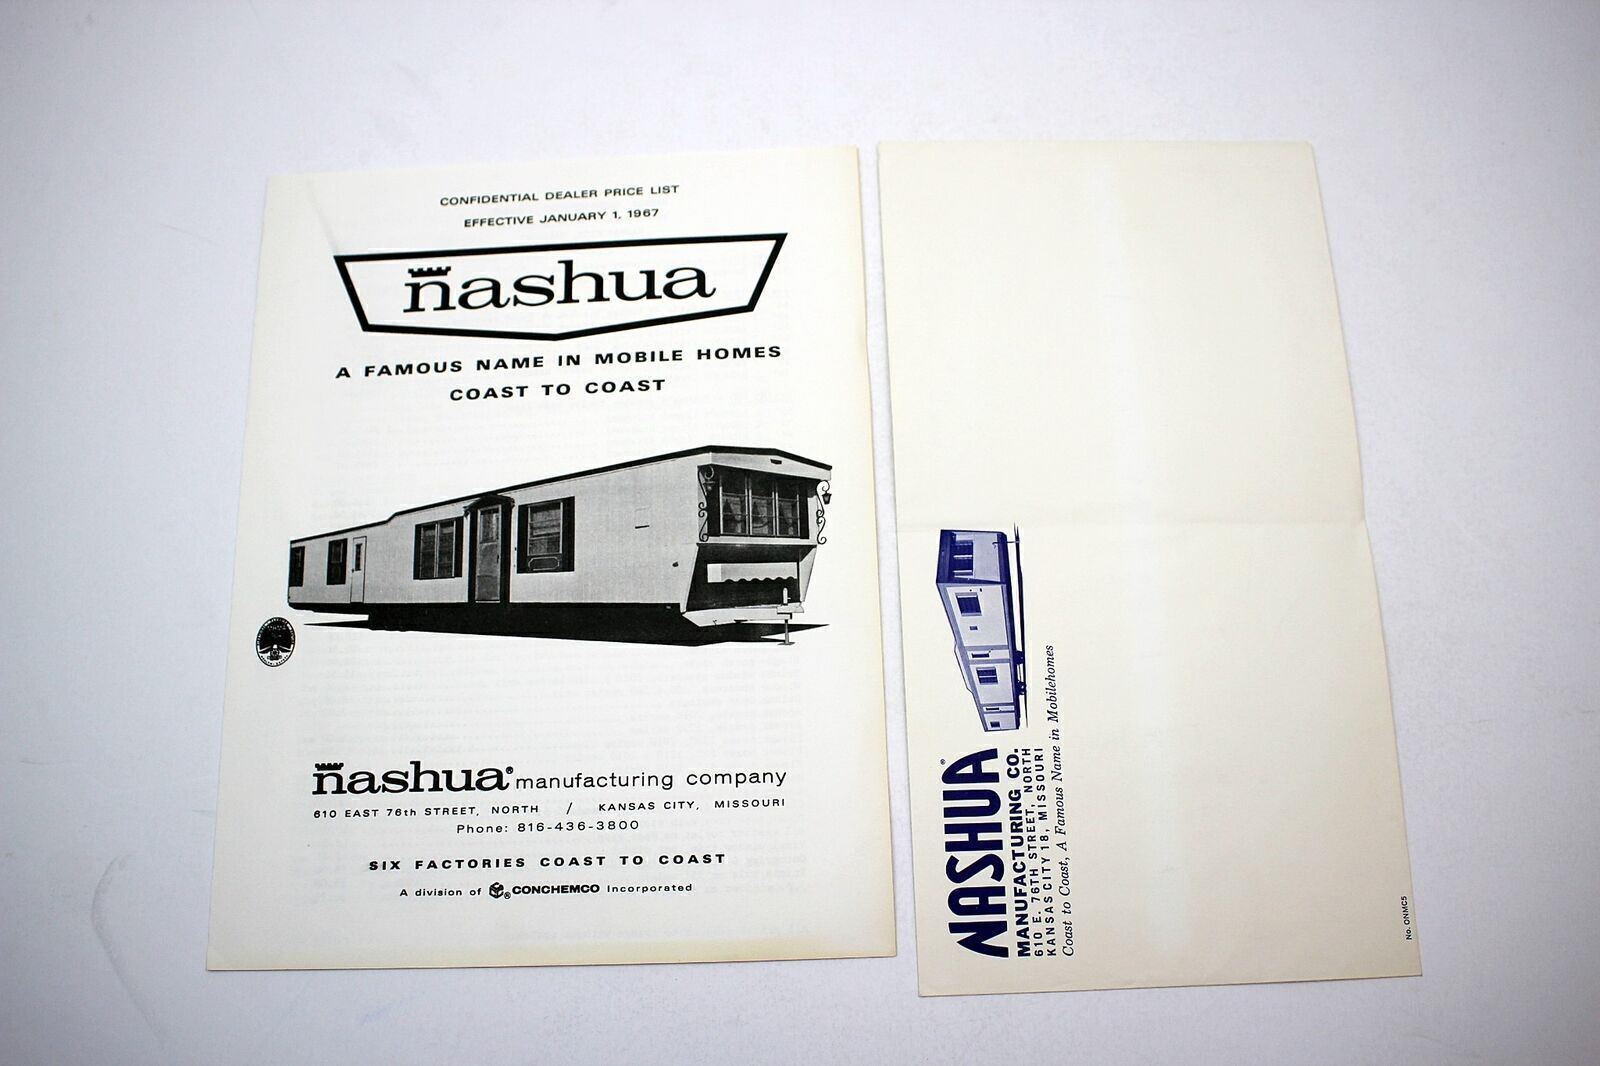 Nashua Mobile Homes Confidential Dealer Price List for 1967 + Envelope #12